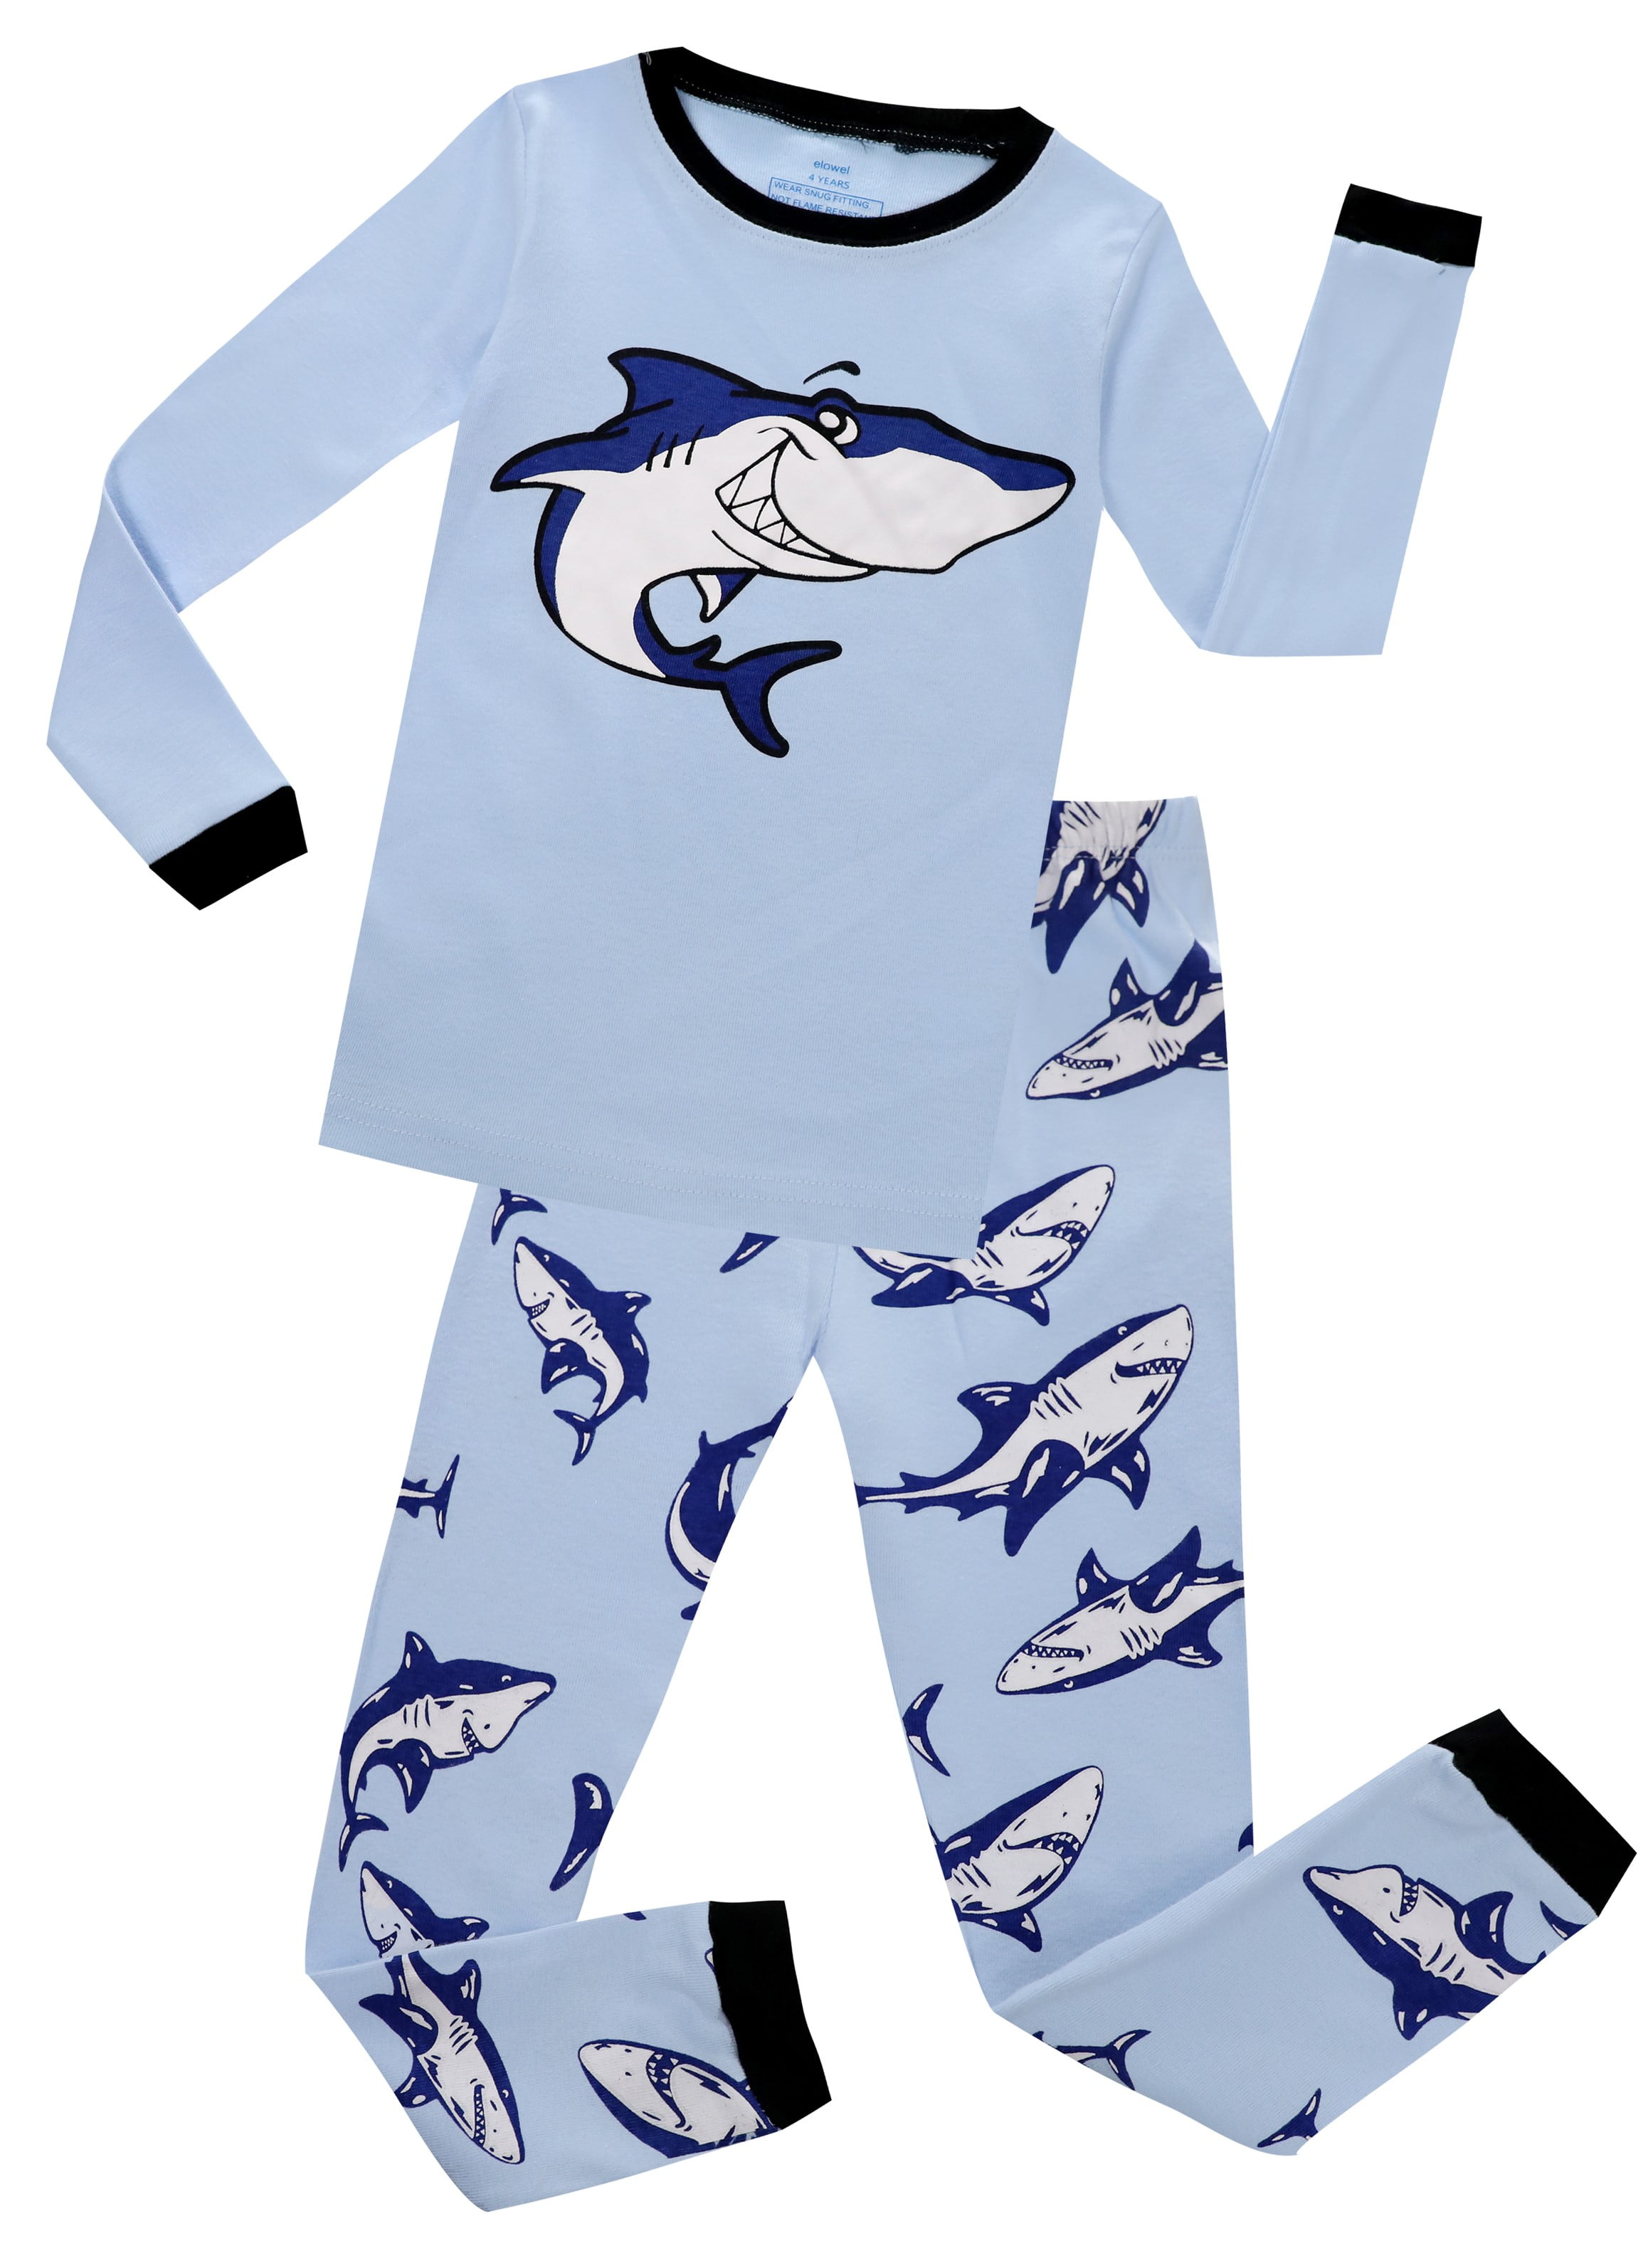 Details about   Paw Patrol Pajamas 4T Toddler Boy 2 pc PJ Set Soft Flannel Flame Resistant 